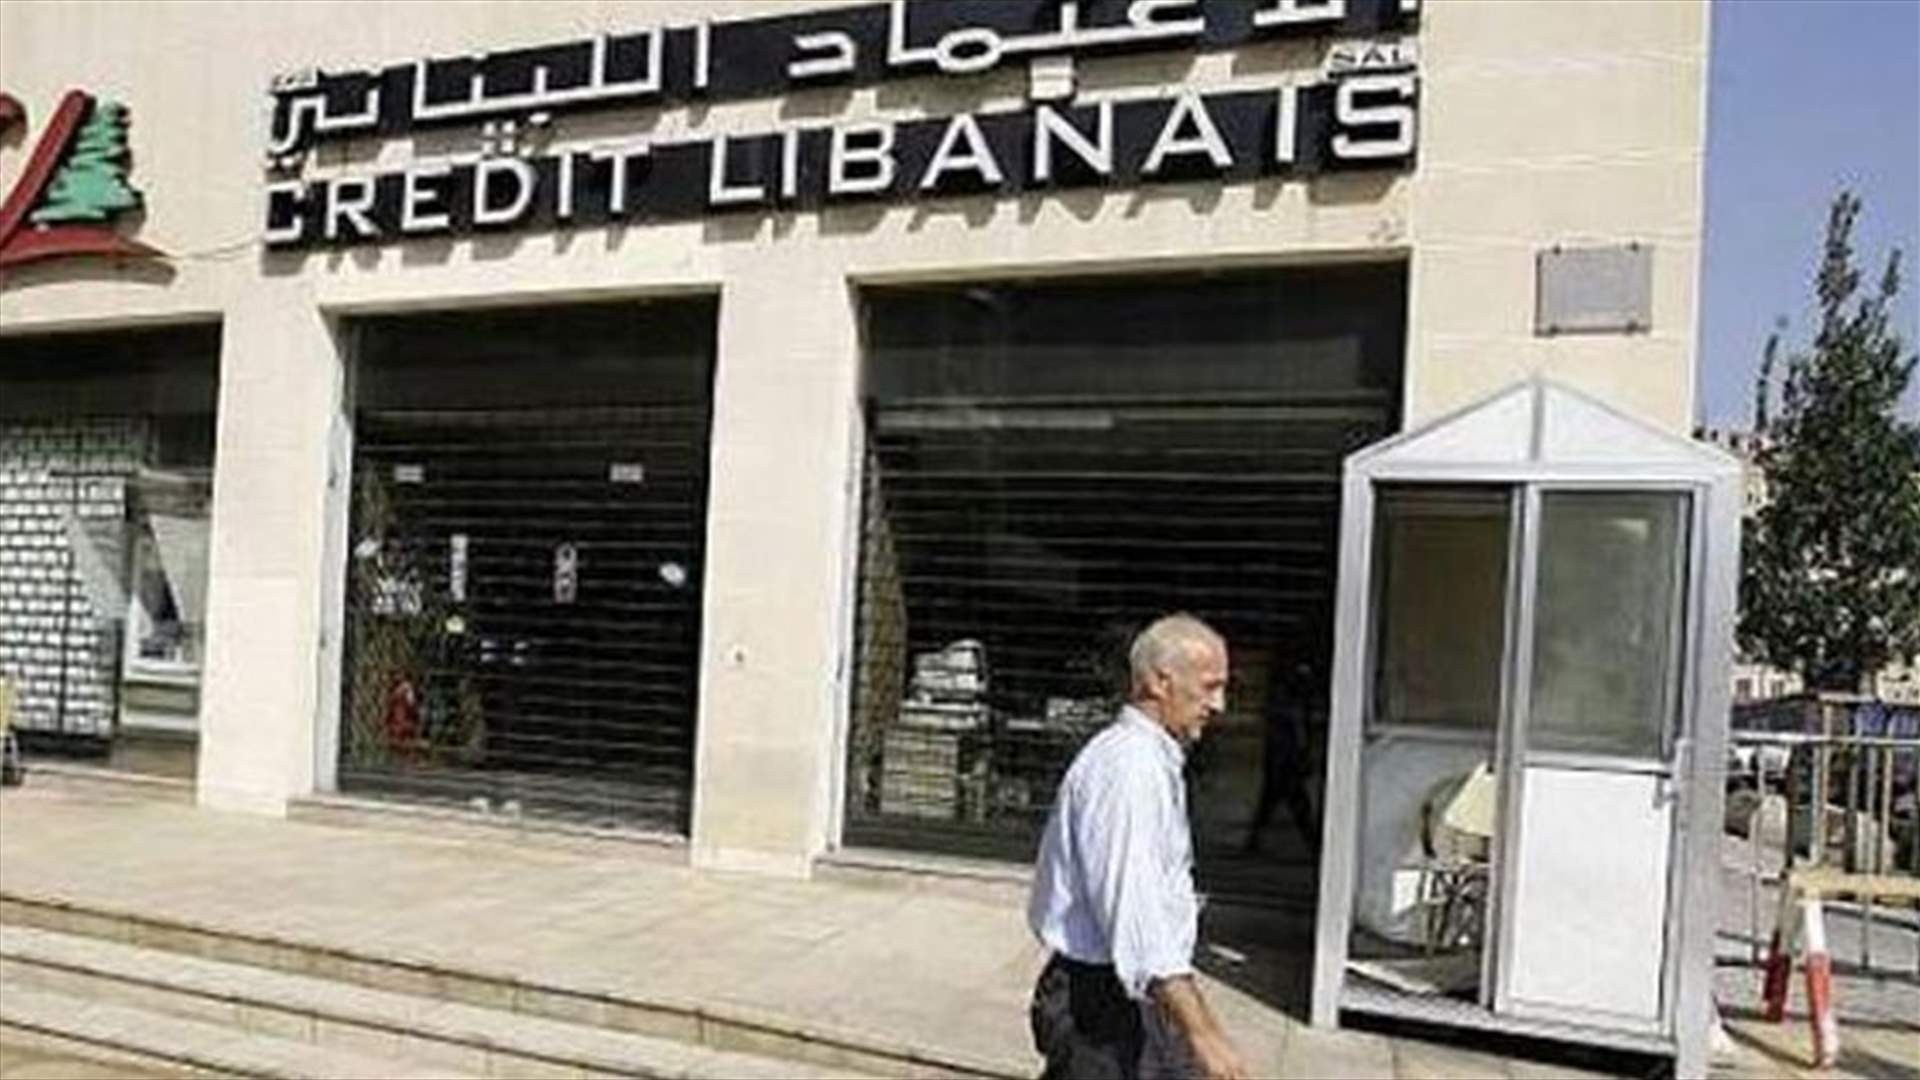 Four masked gunmen rob ‘Credit Libanais’ bank – Mkalles branch